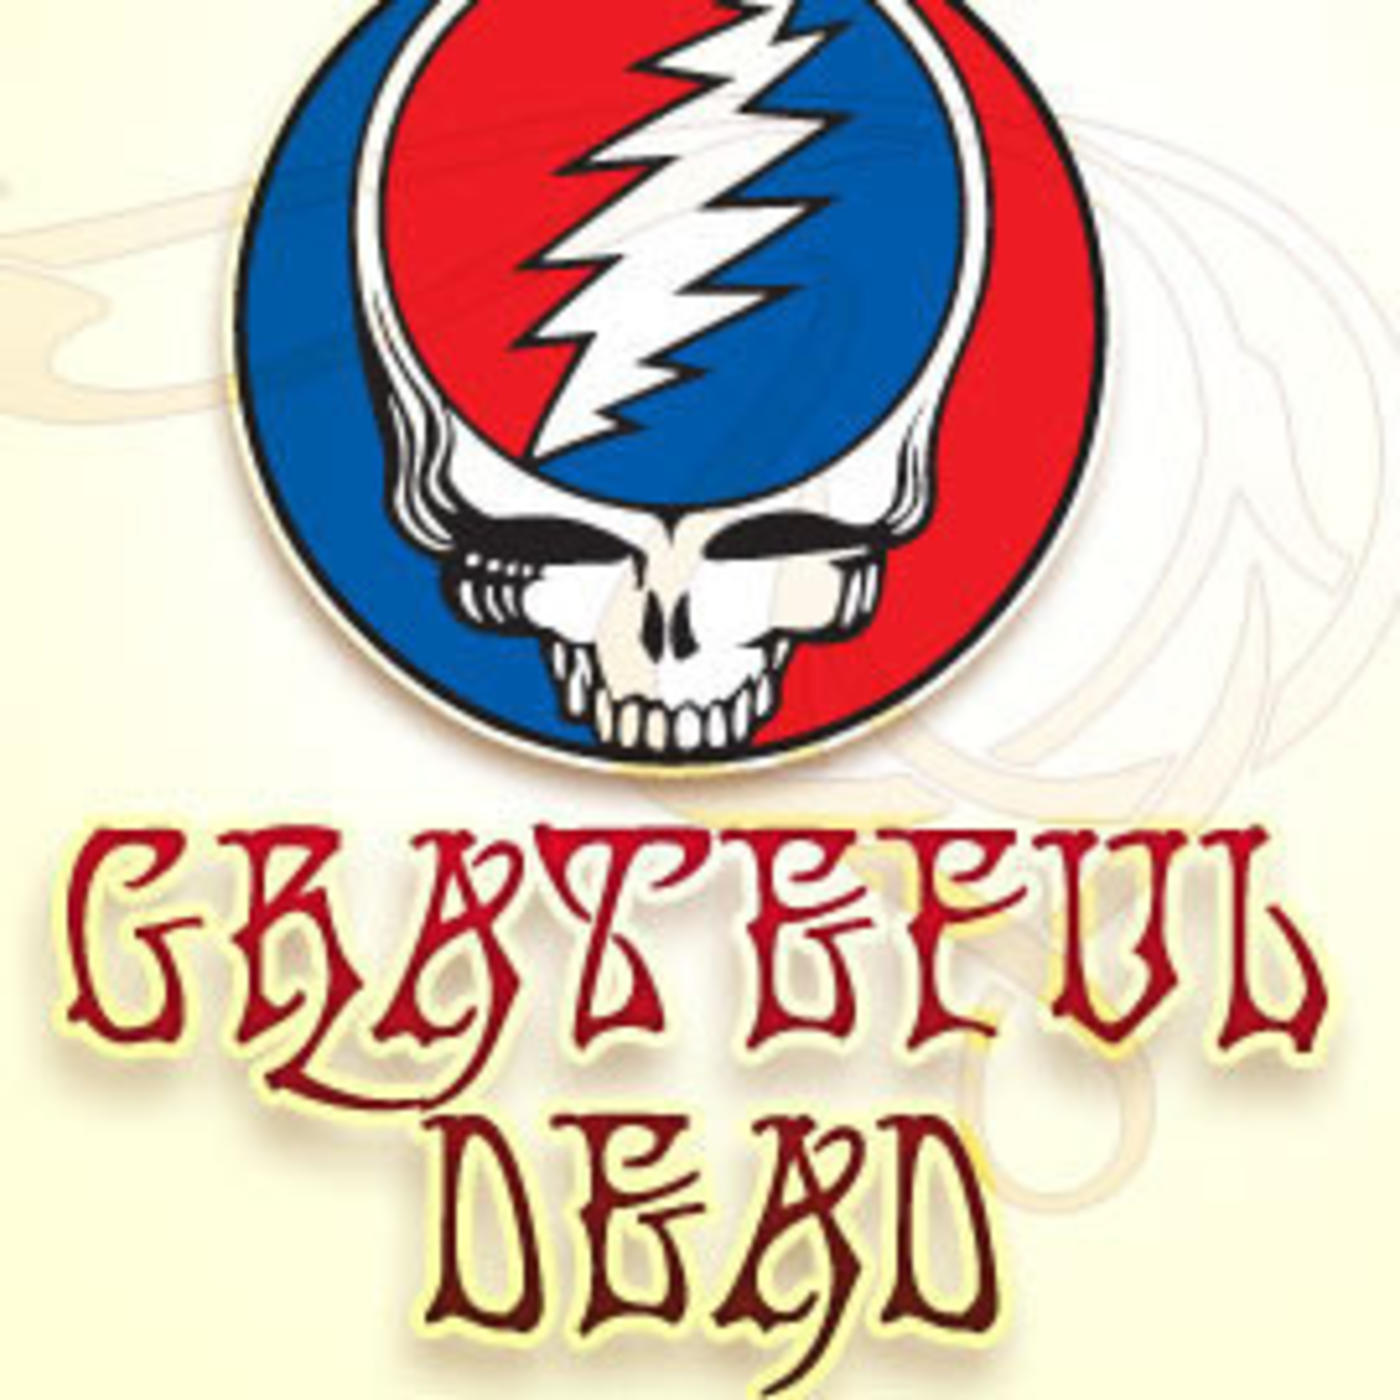 Official Grateful Dead Playlist - Friend of the Devil, Casey Jones, Touch of Grey, Truckin', Ripple